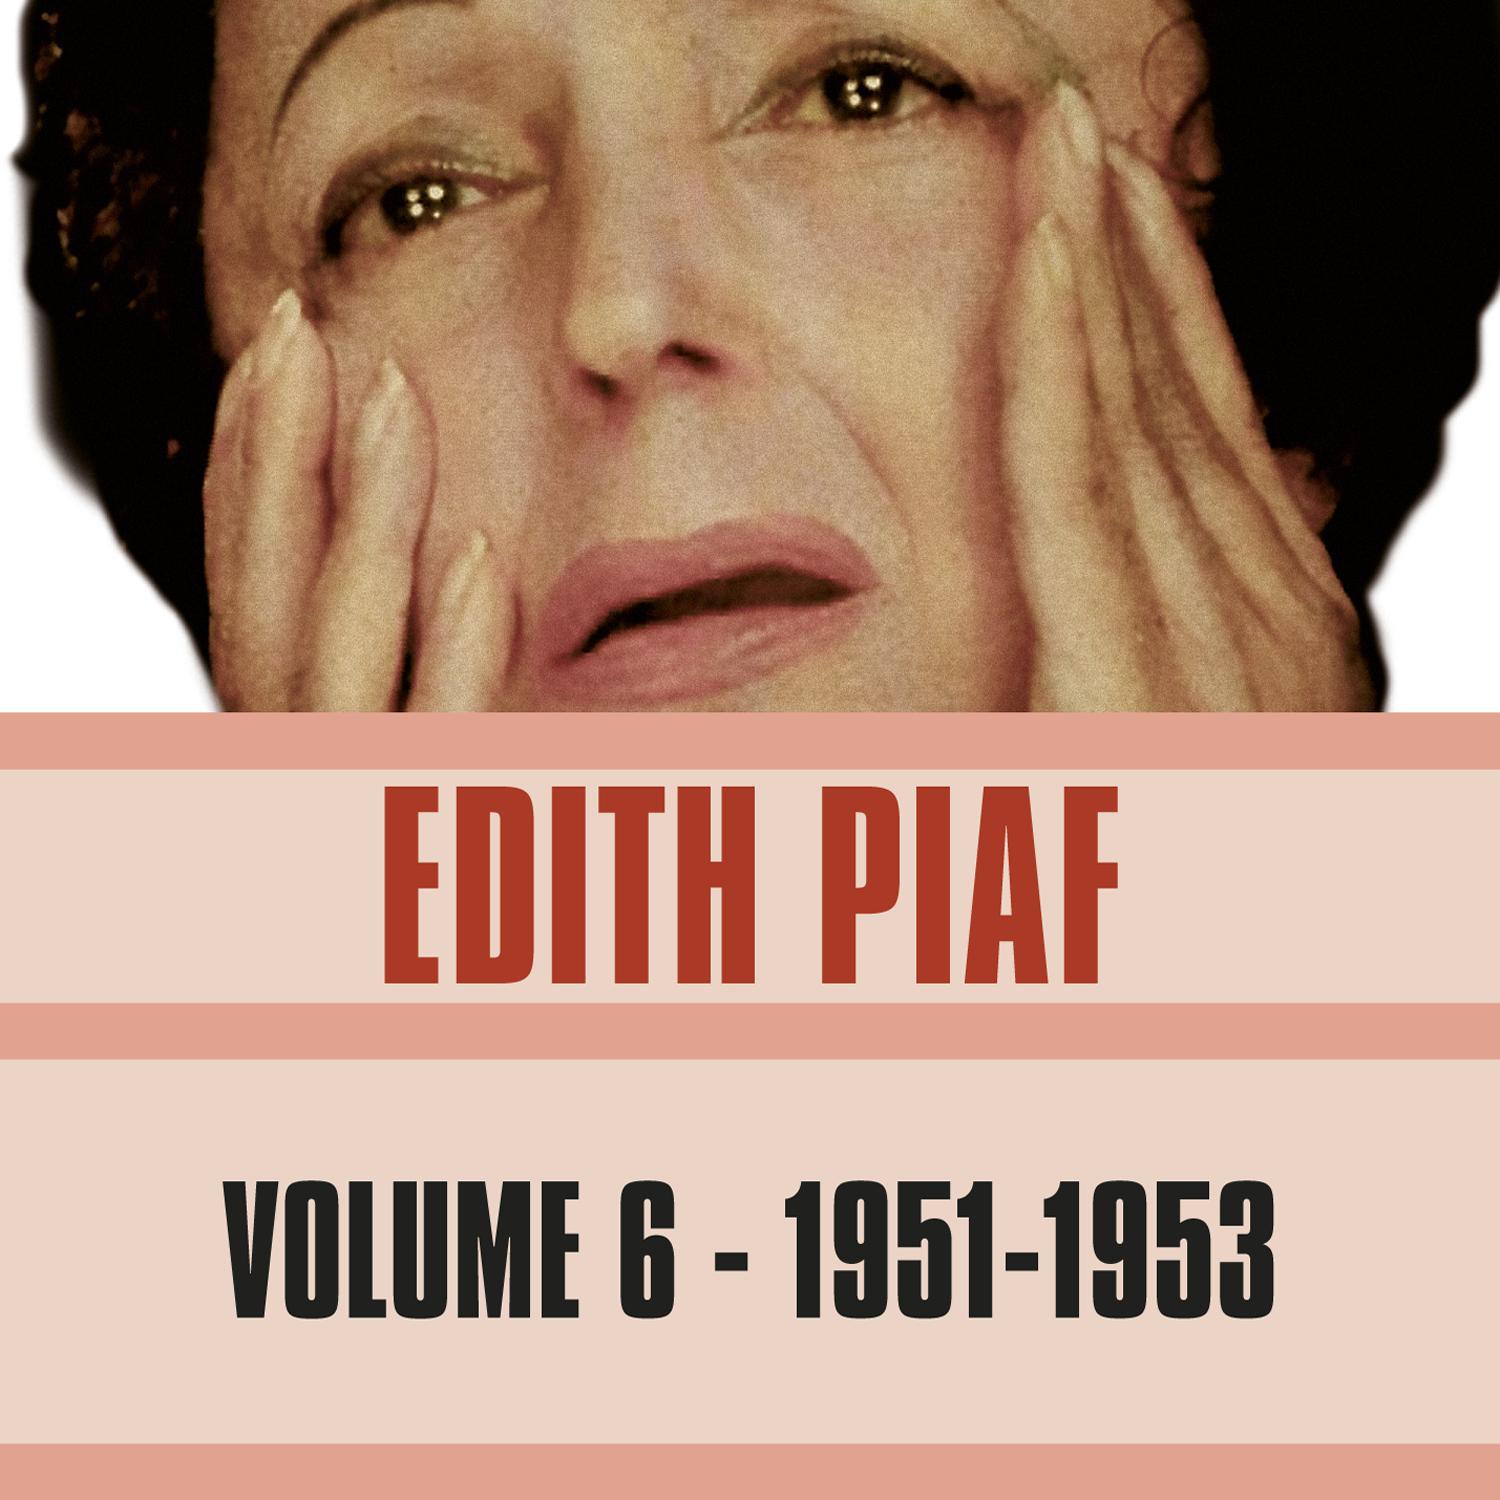 Volume 6 - 1951-1952